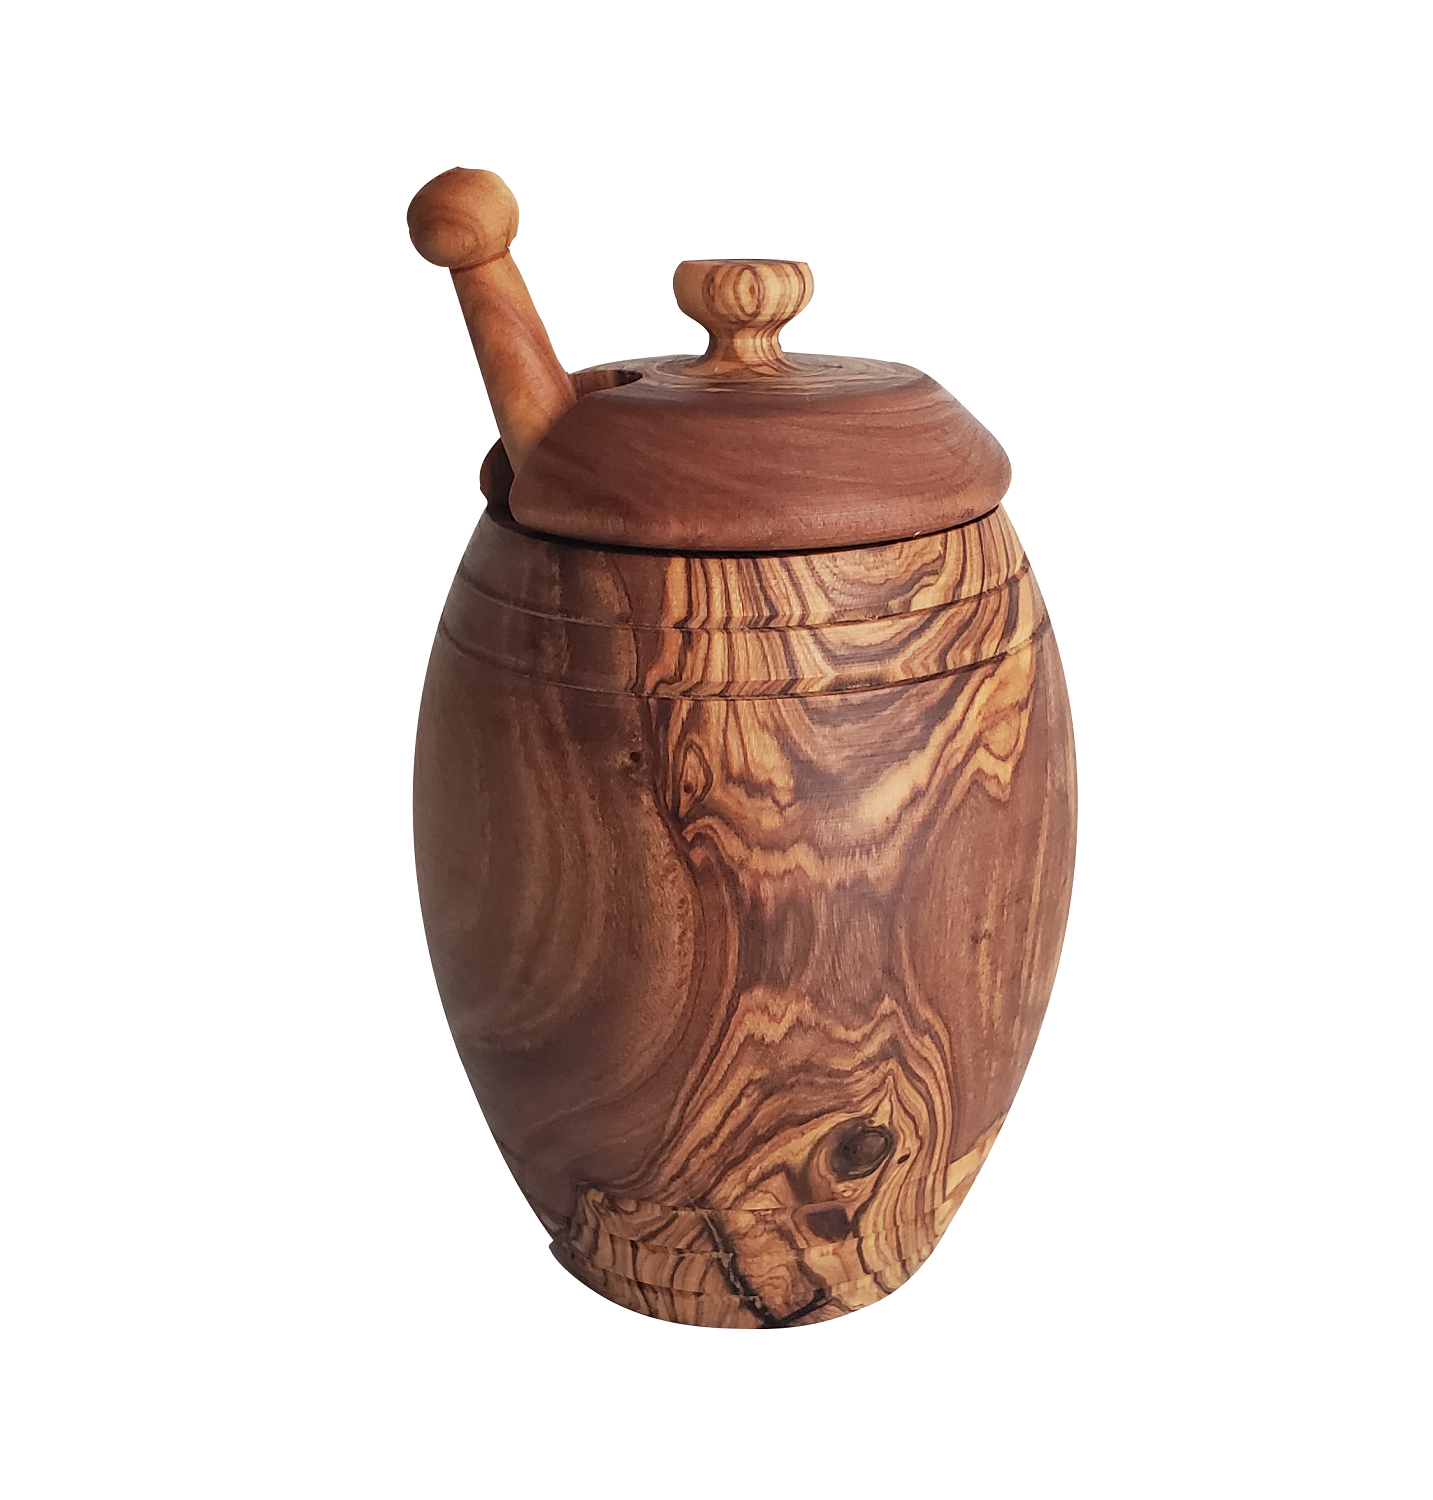 OLIVIKO 100% olive wood Honey pot, Jar with a dipper